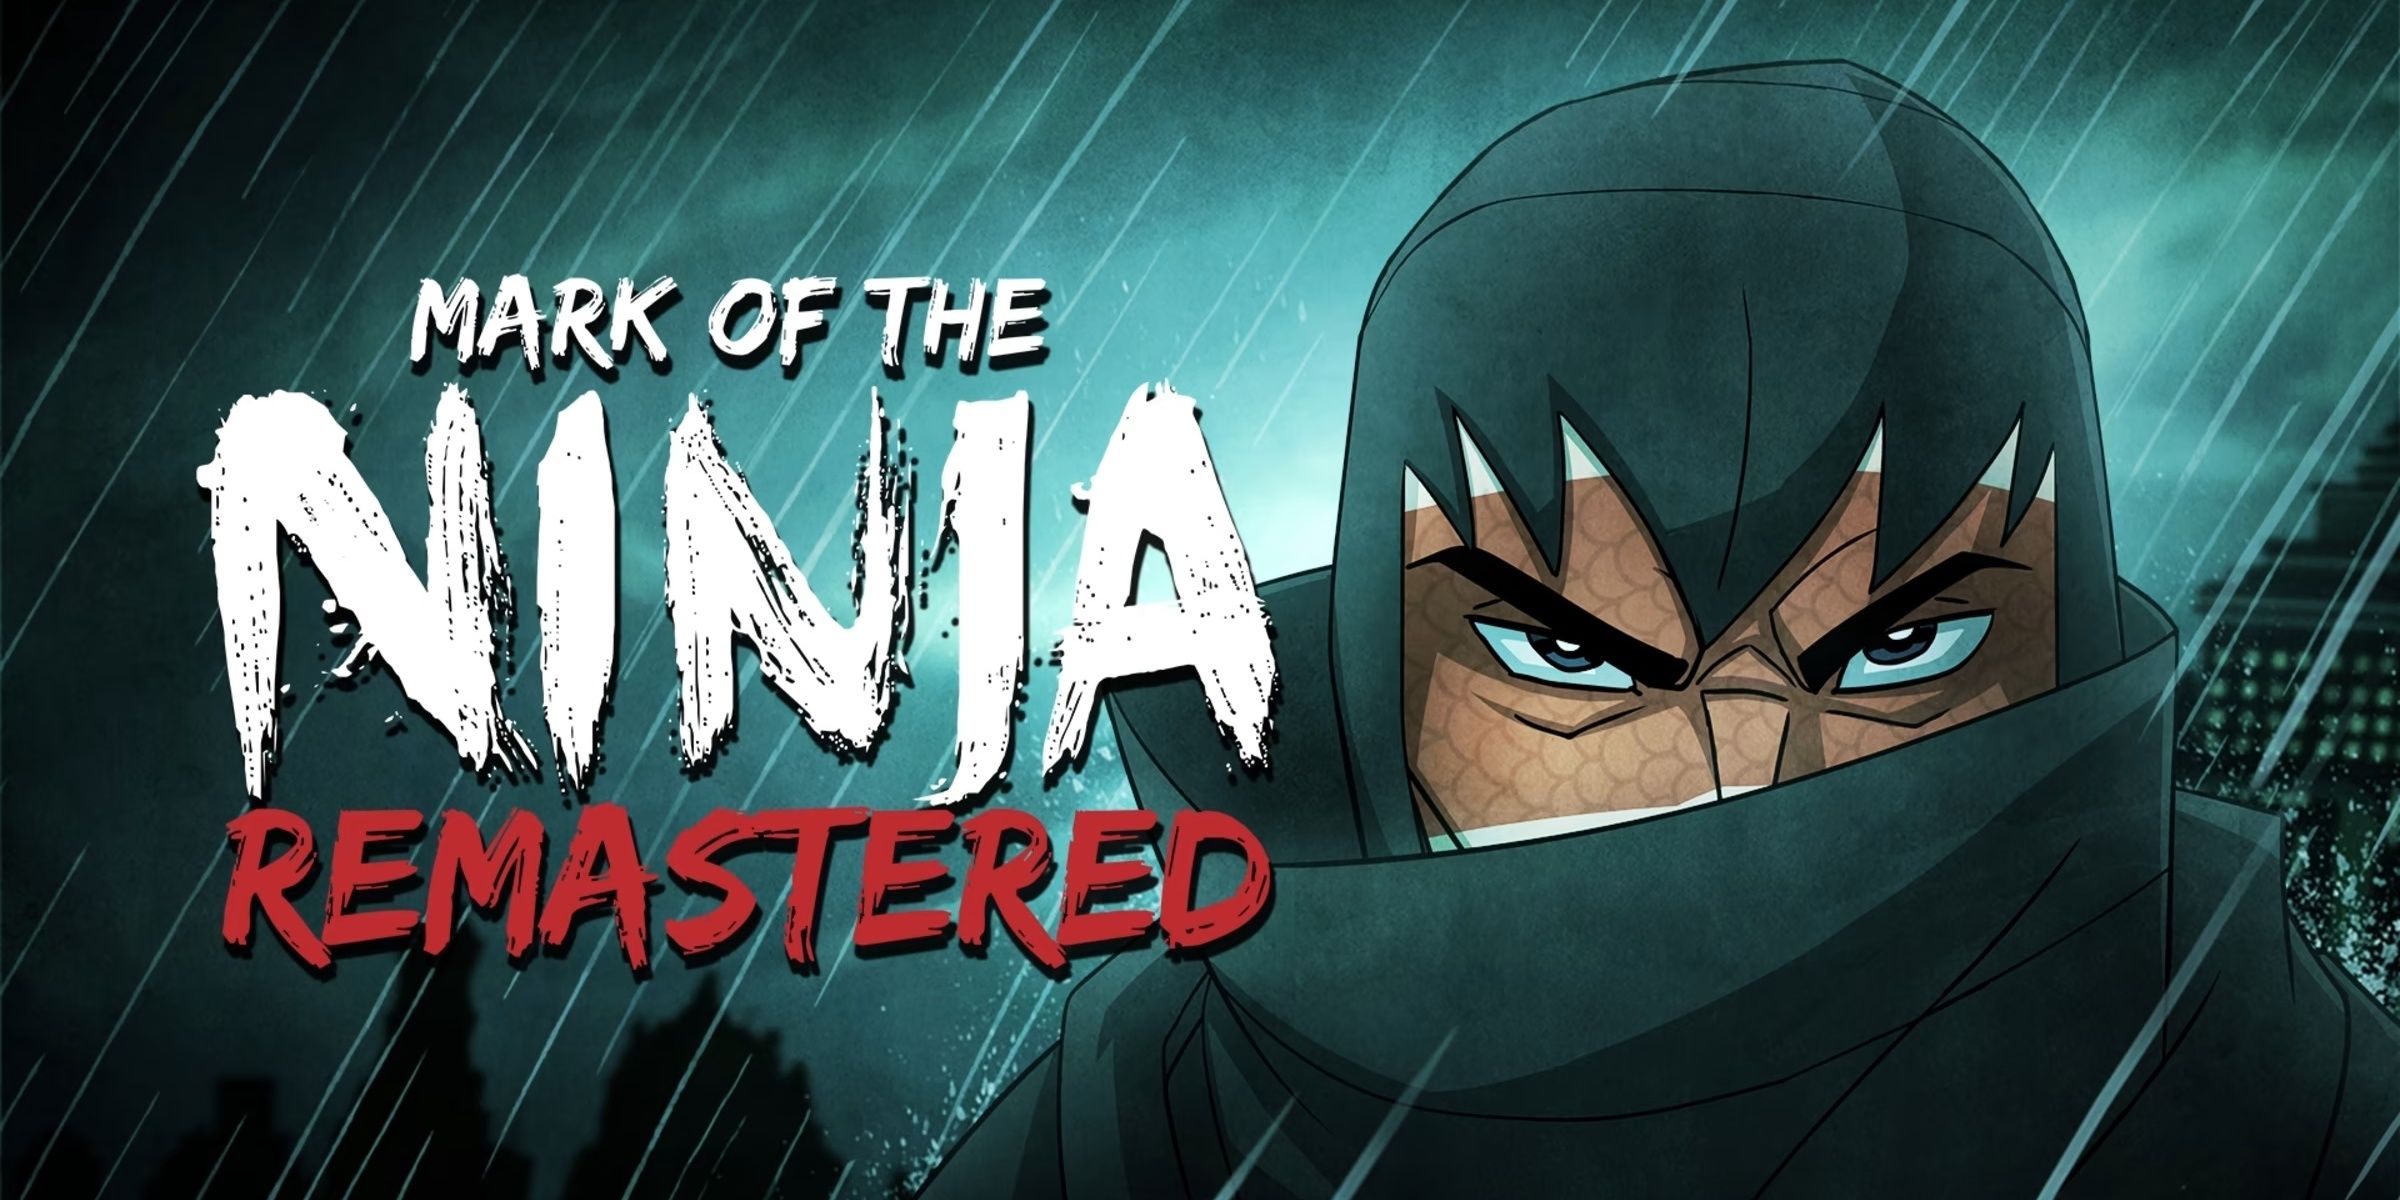 Mark Of The Ninja Remastered